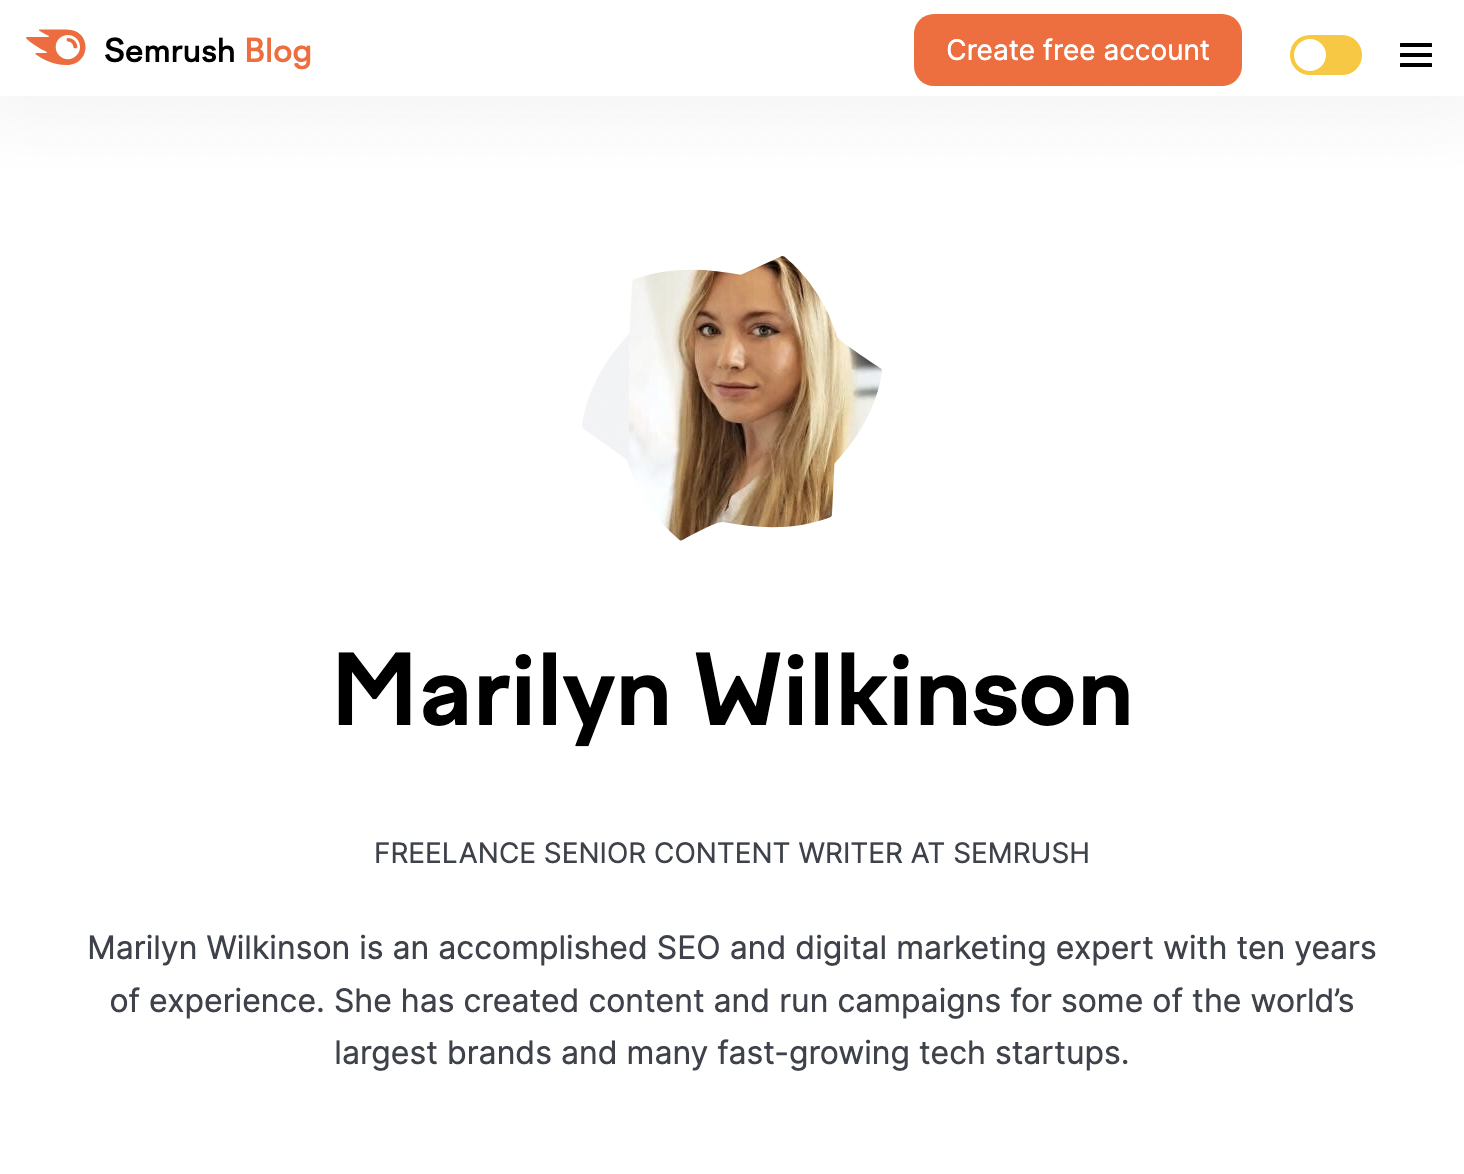 Marilun Wilkinson's autor bio on Semrush Blog